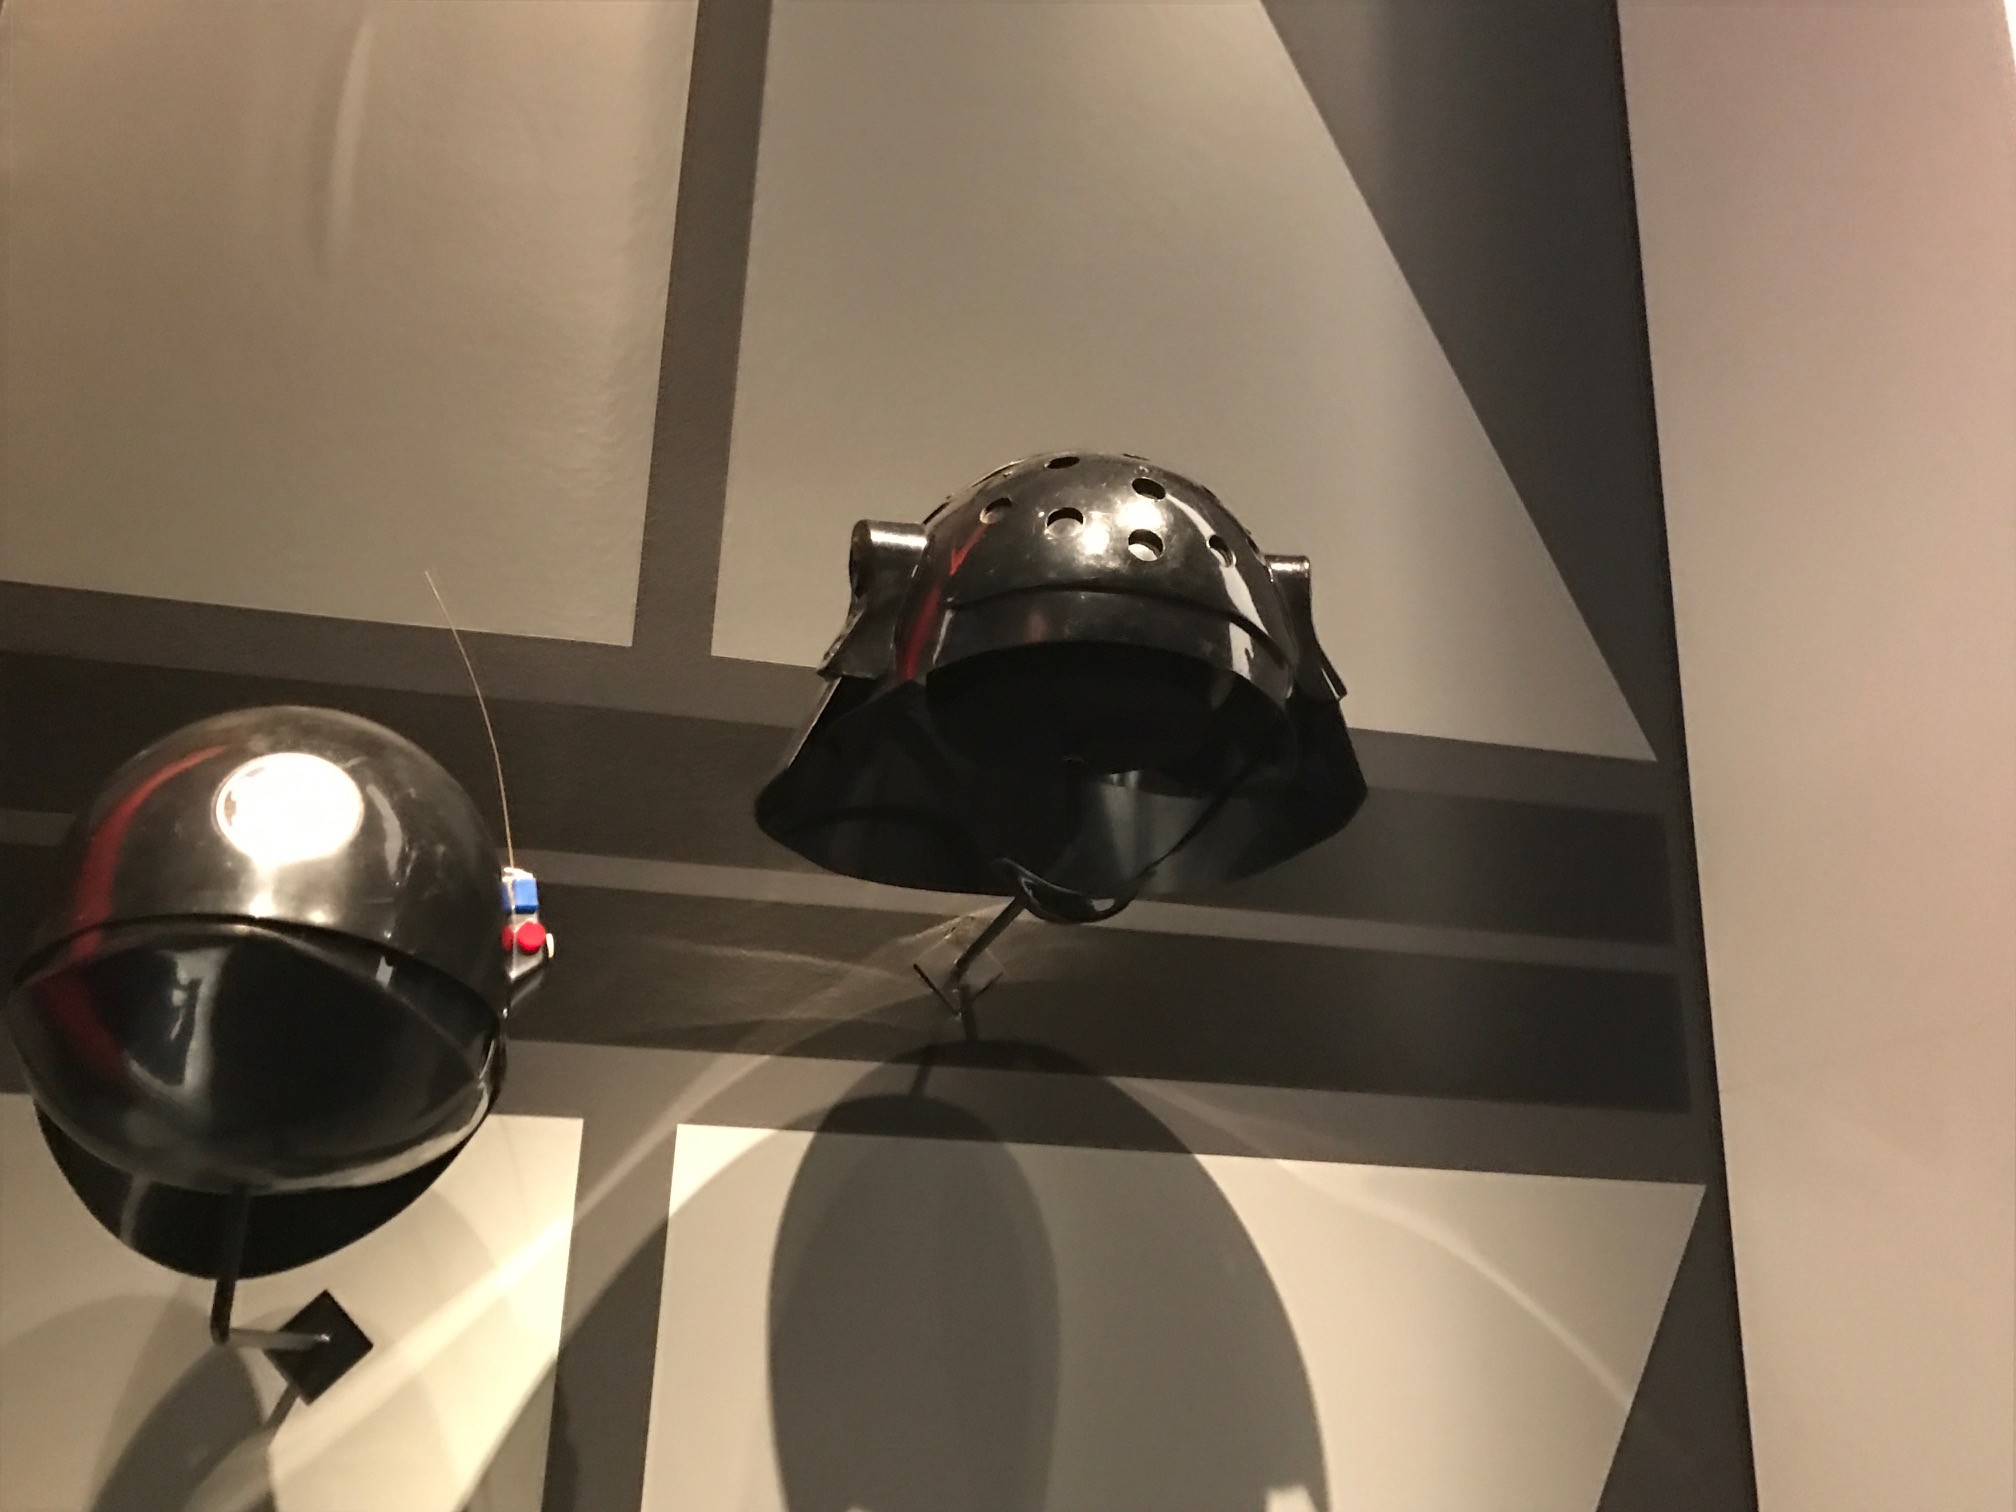 Helmets 2